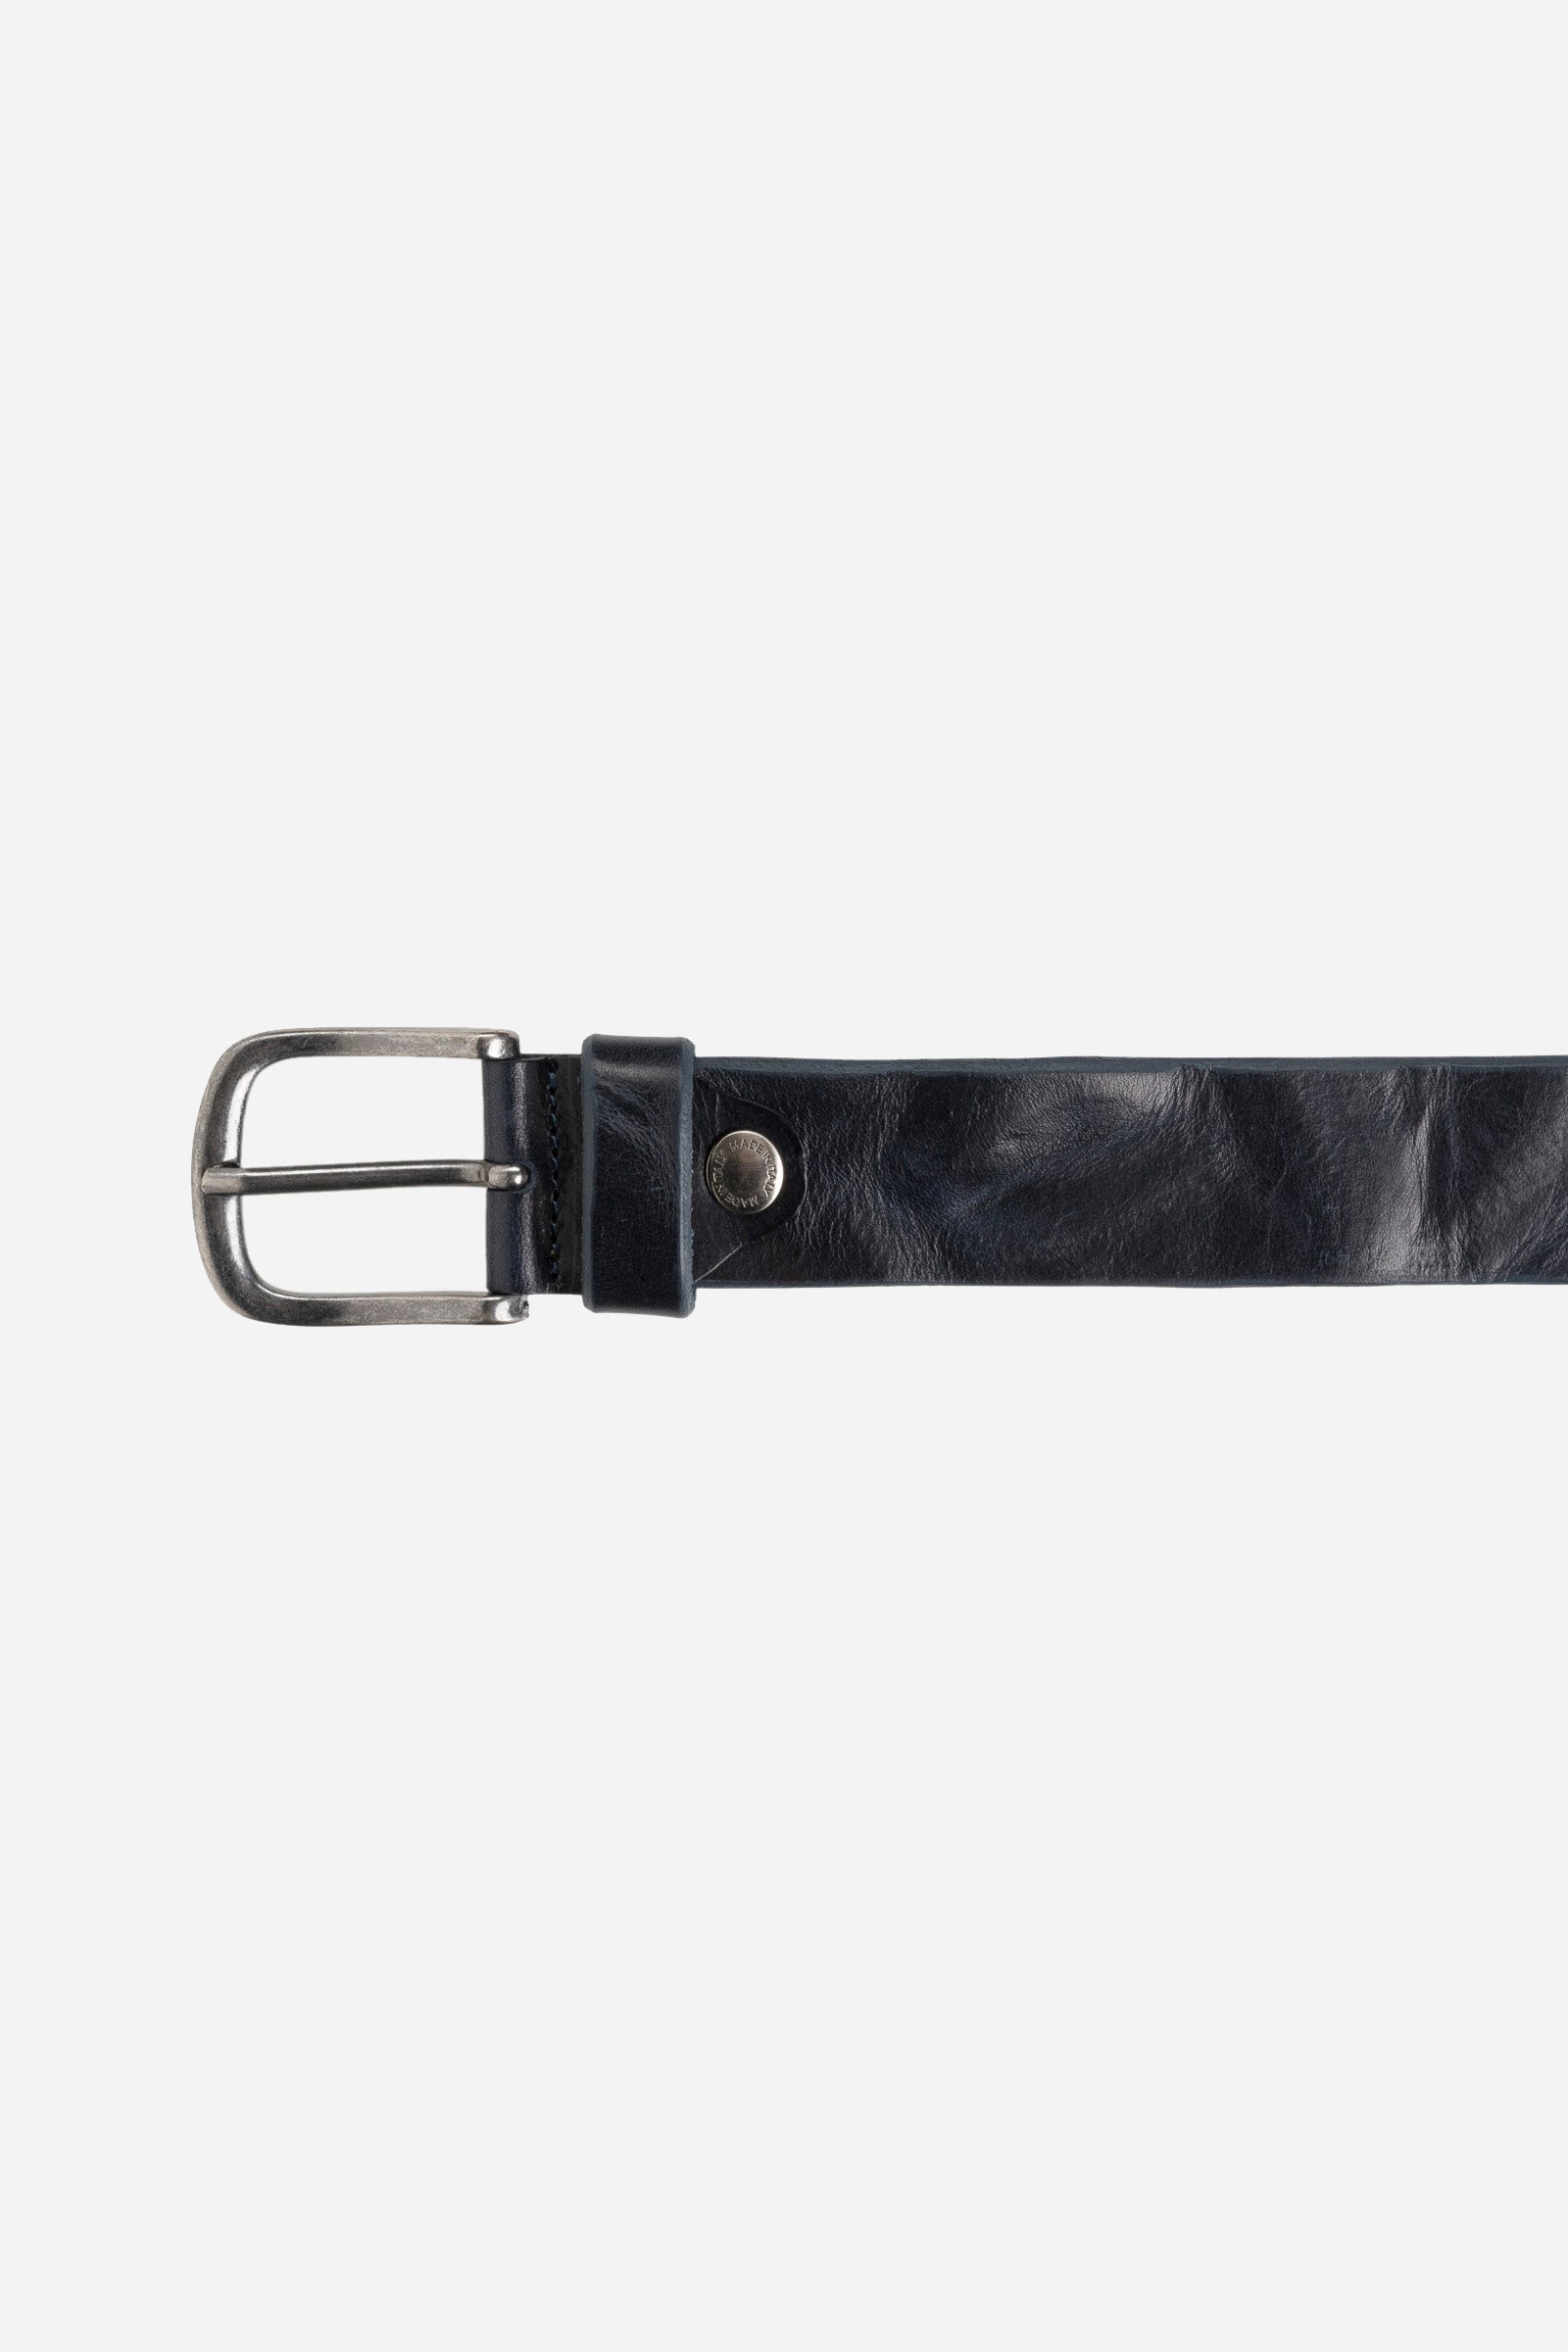 Blue leather belt